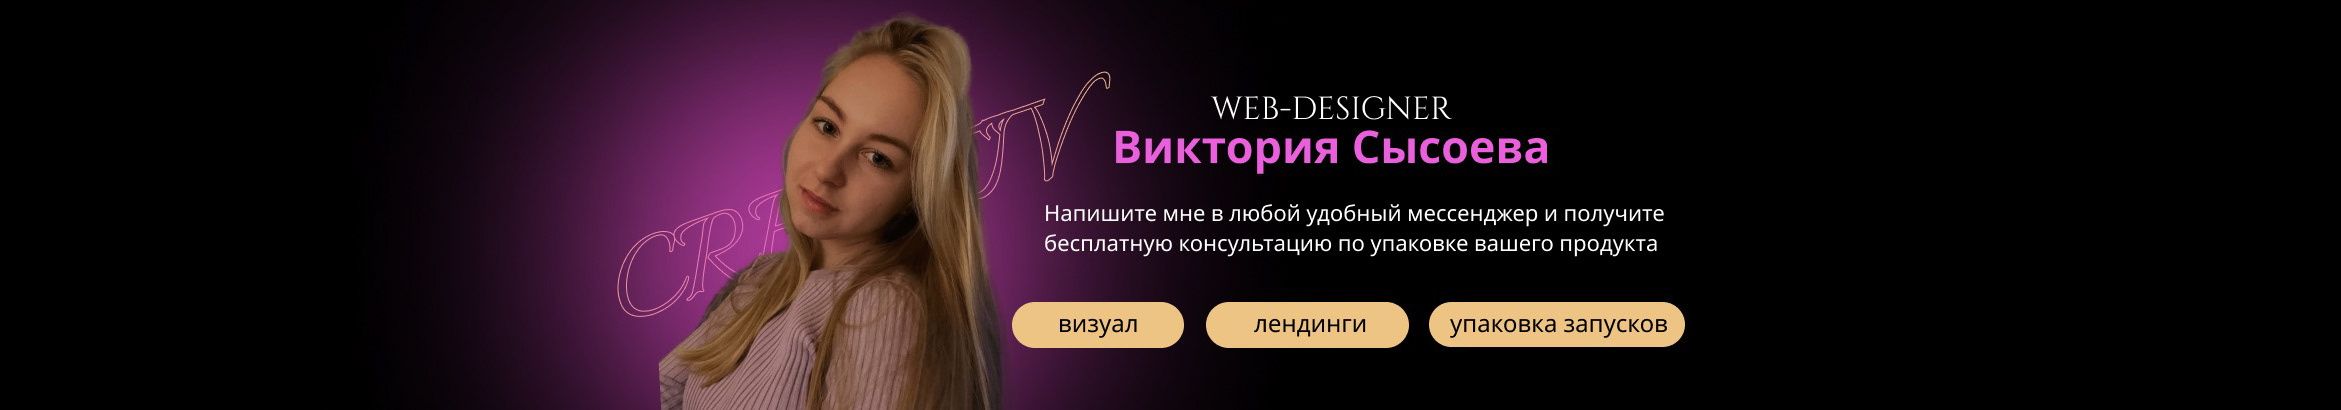 Viktoria Sysoevas profilbanner